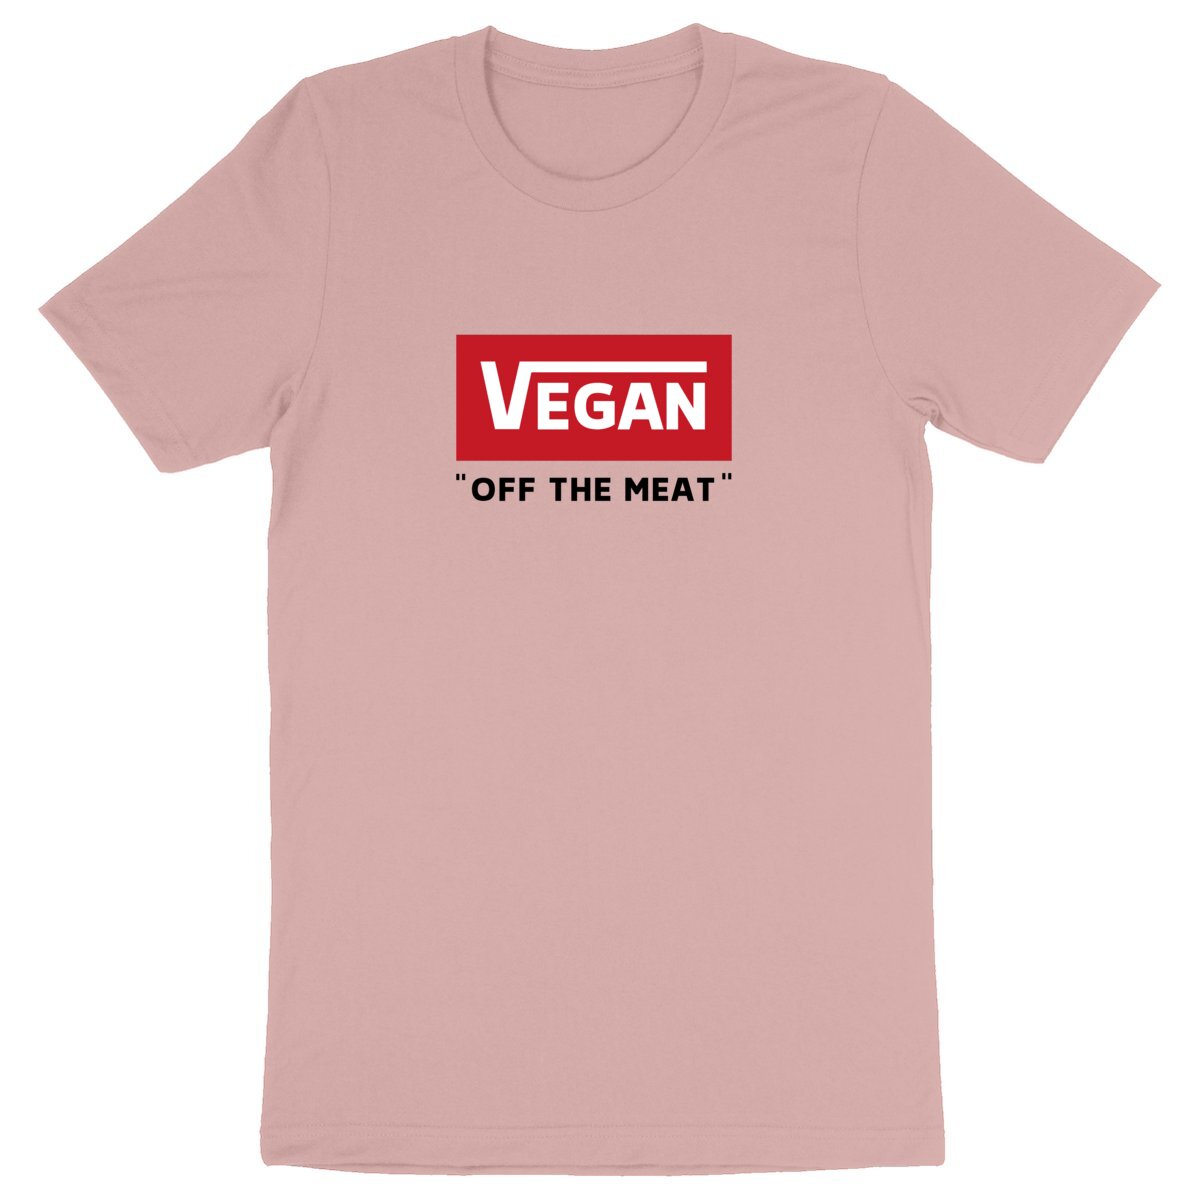 Vegan off the meat - Unisex Organic T-shirt